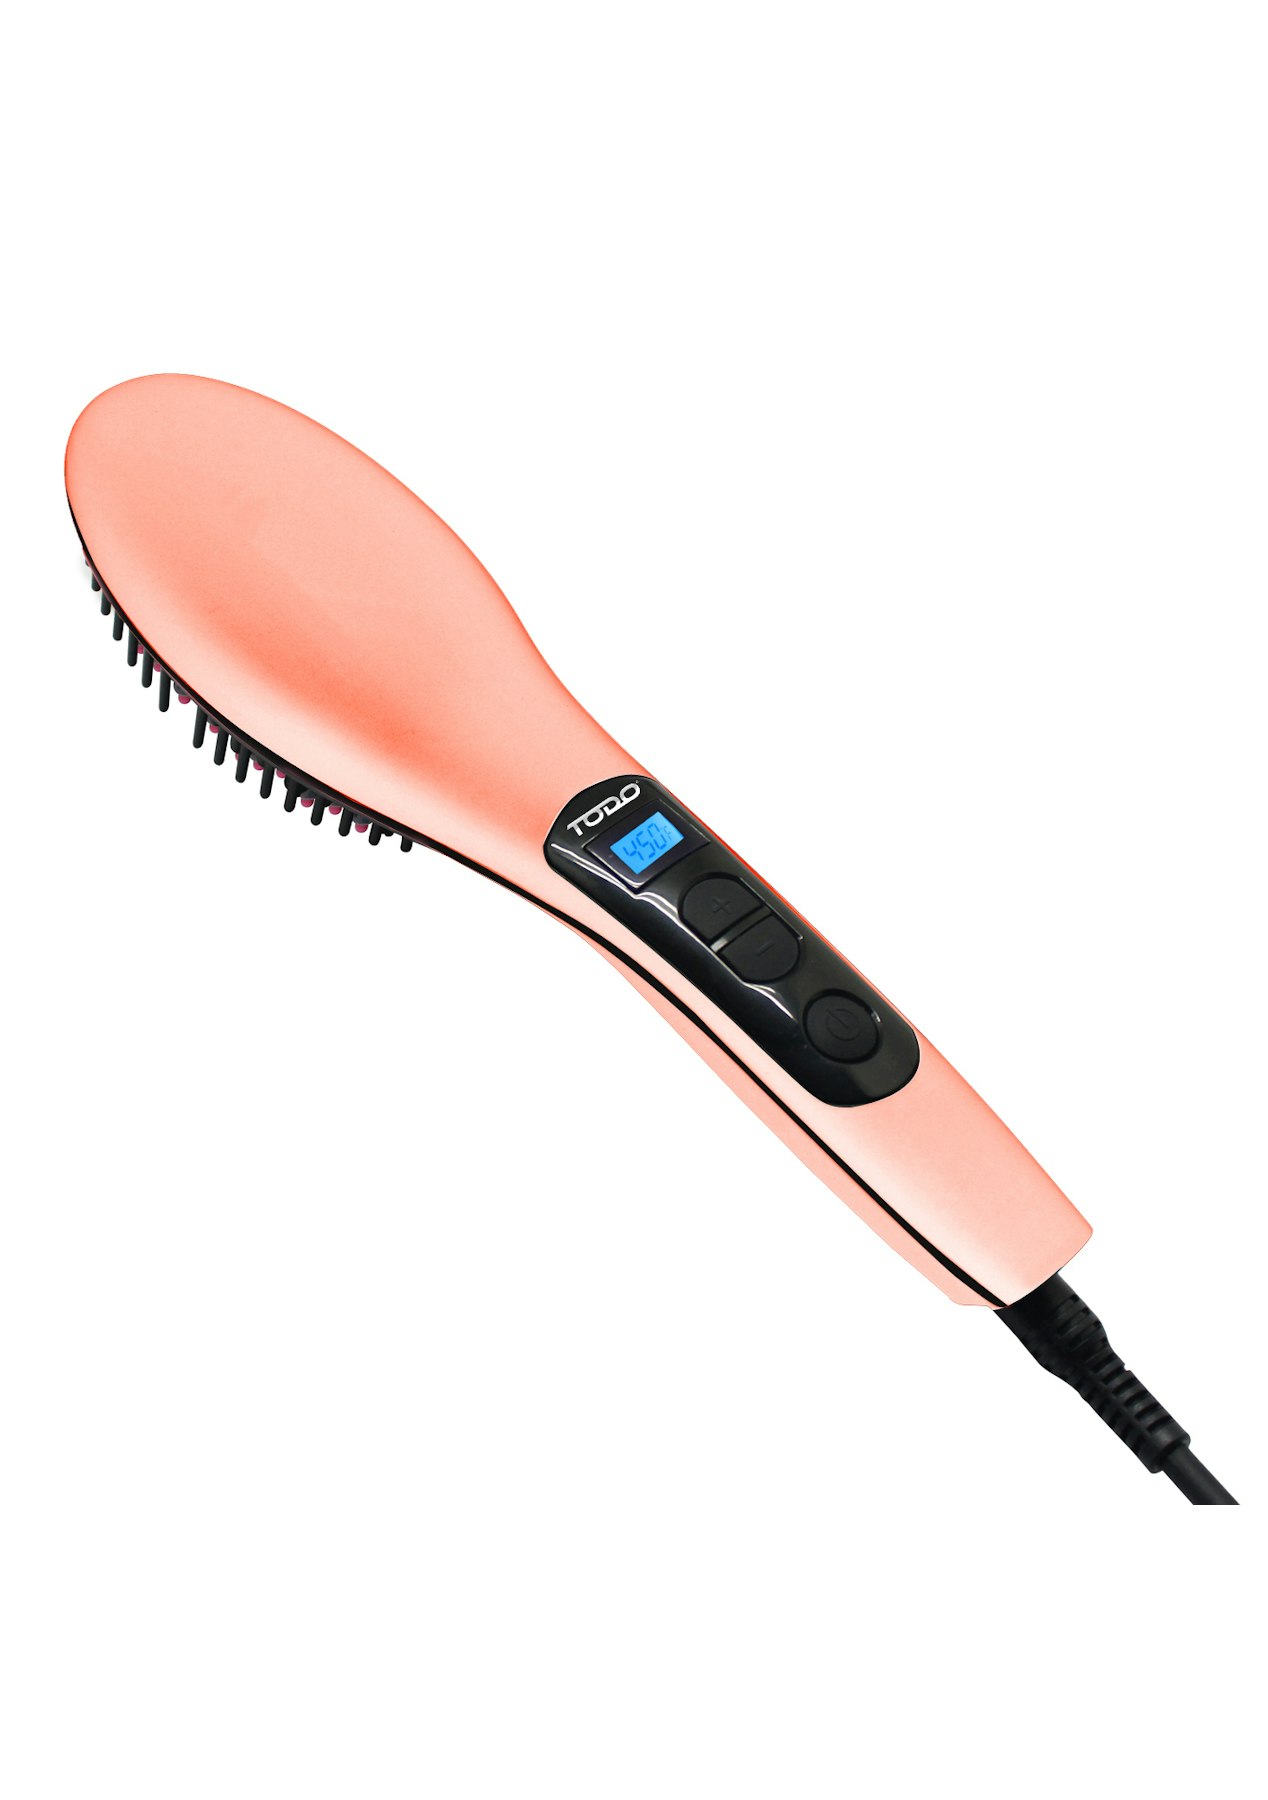 Todo Ceramic Tourmaline Ionic Hair Brush Straightener Iron Anti Frizz Comb  Peach - Onceit